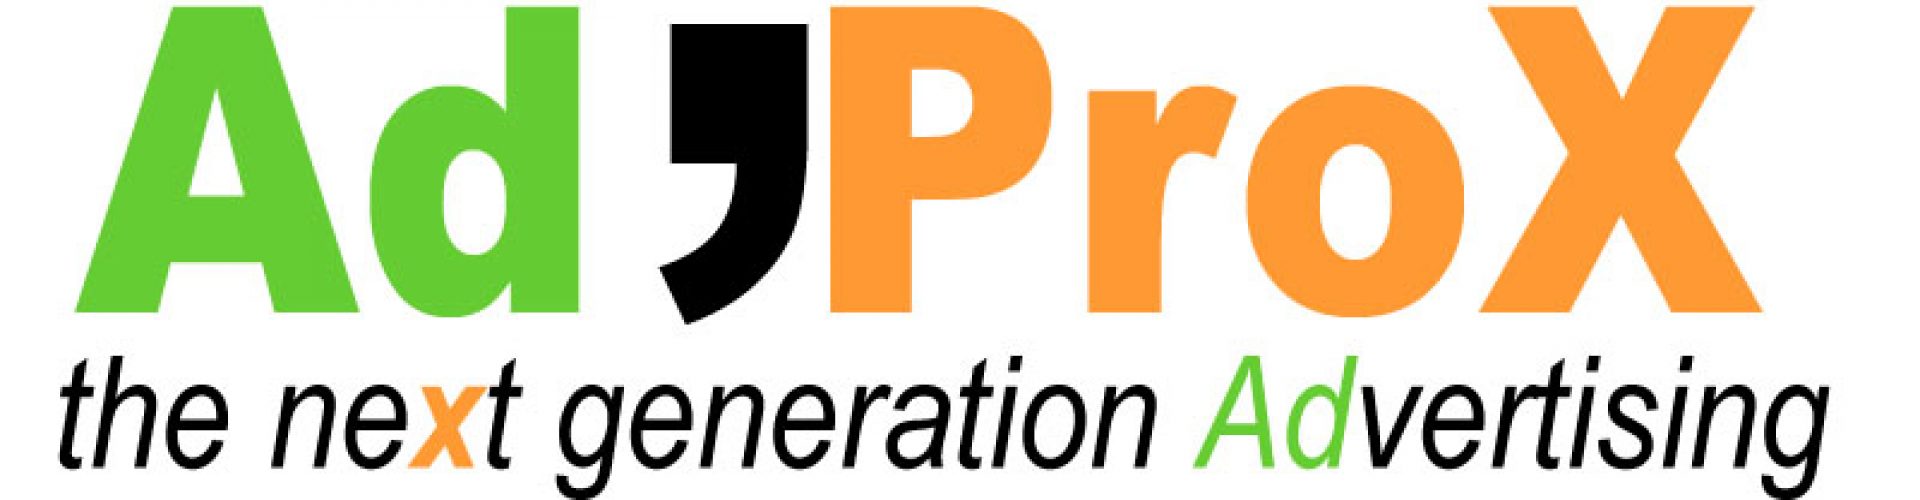 logo2007